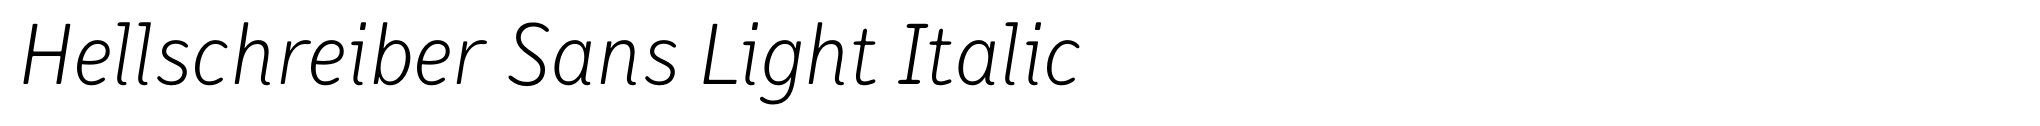 Hellschreiber Sans Light Italic image